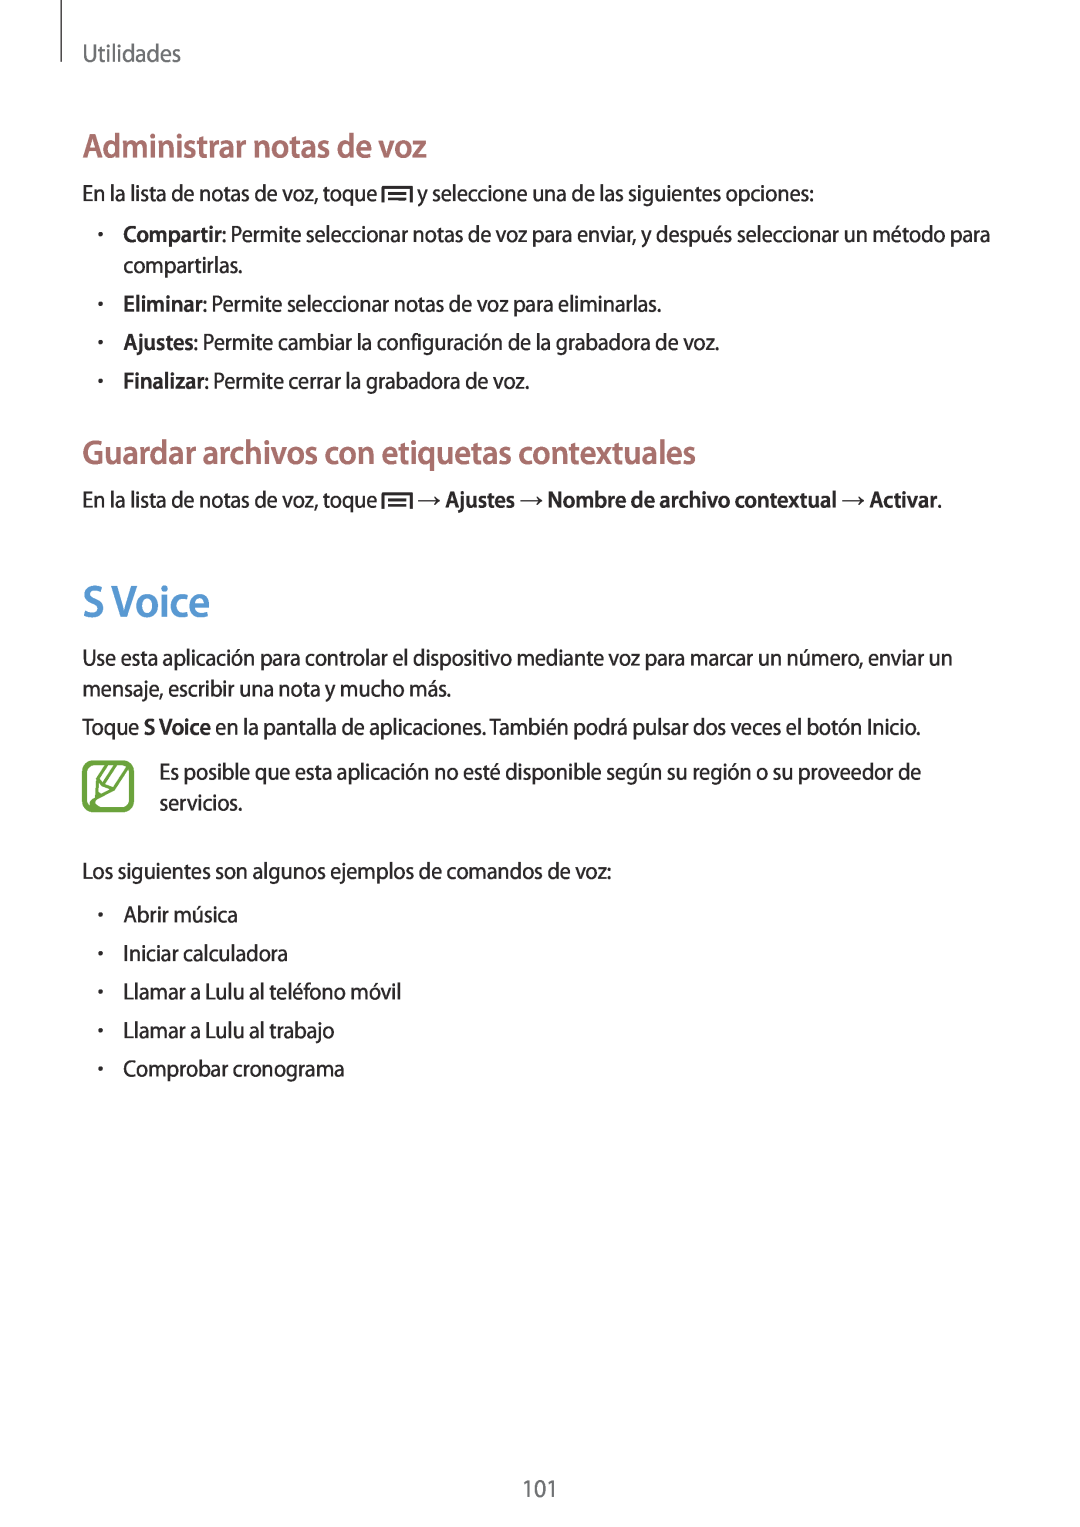 Samsung GT-I9195DKYDBT manual S Voice, Administrar notas de voz, Guardar archivos con etiquetas contextuales, Utilidades 